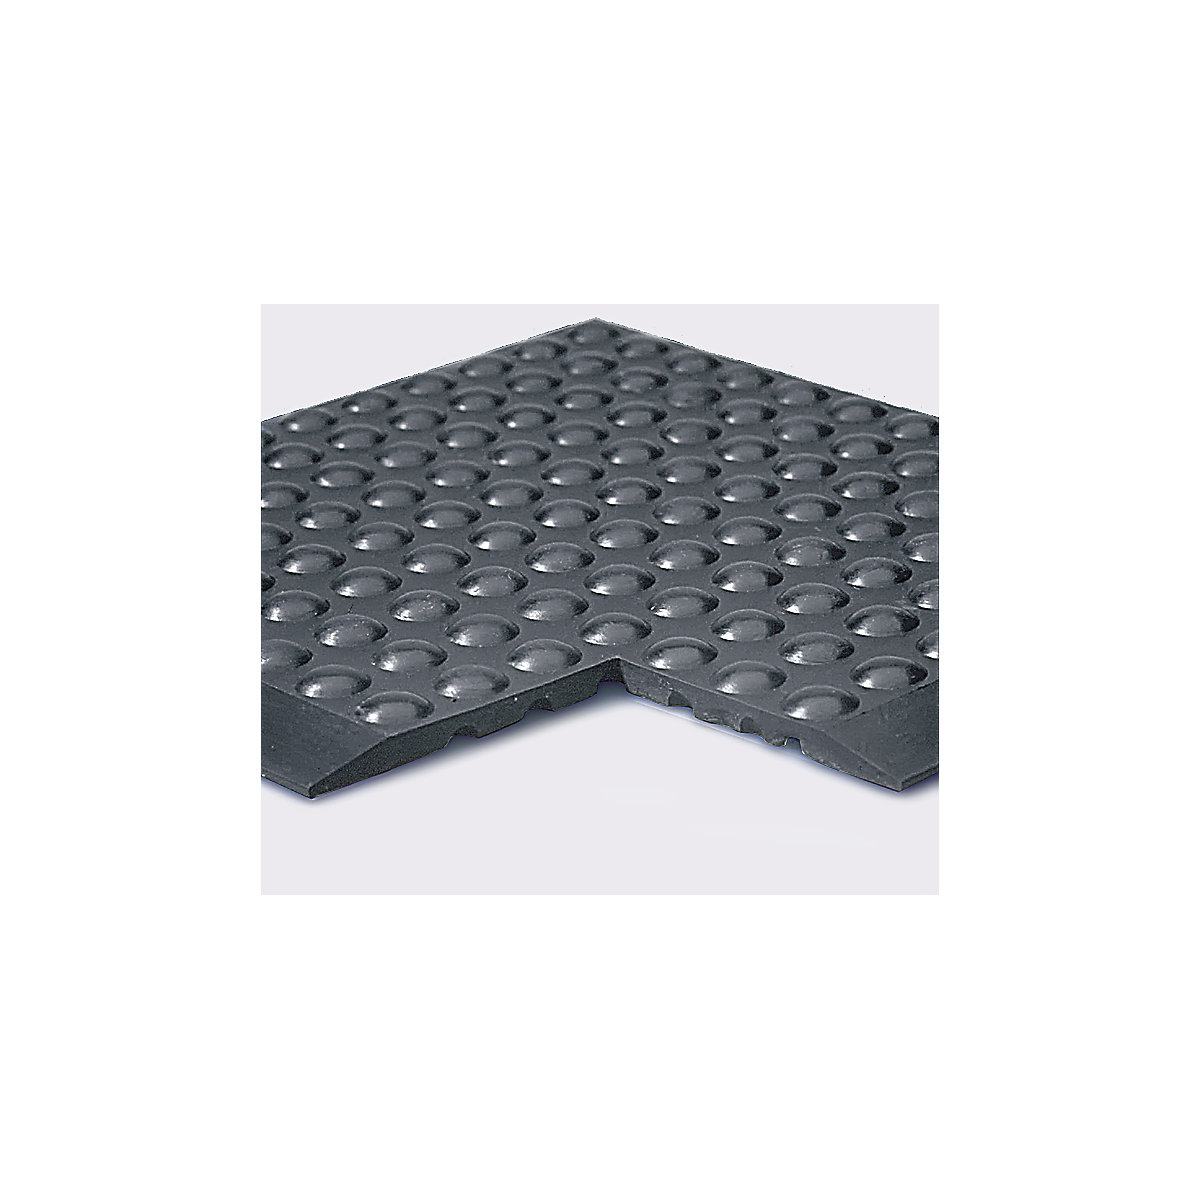 Bubblemat anti-fatigue matting (Product illustration 3)